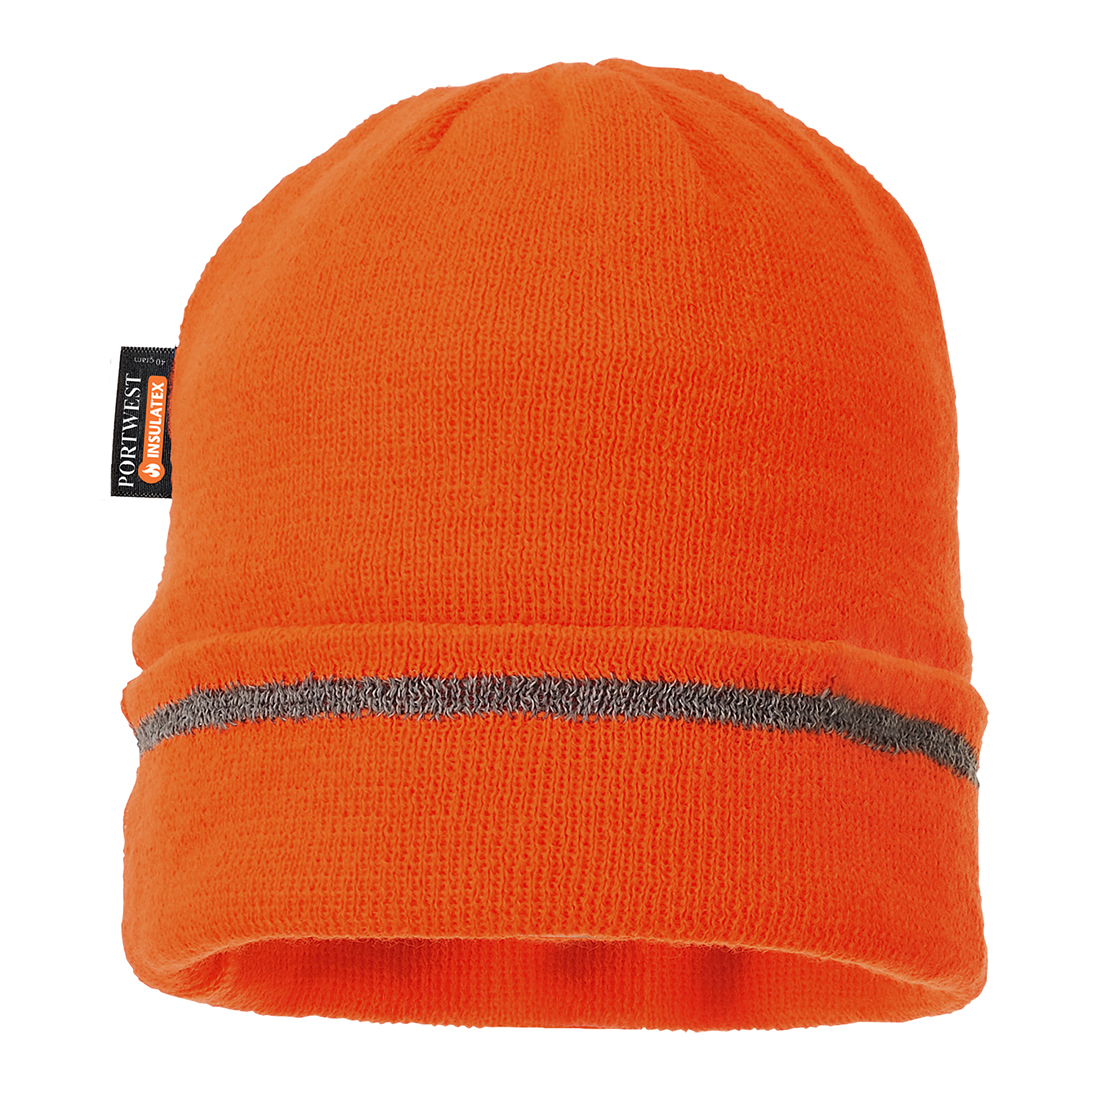 Reflective Trim Knit Hat Insulatex Lined Size  Orange